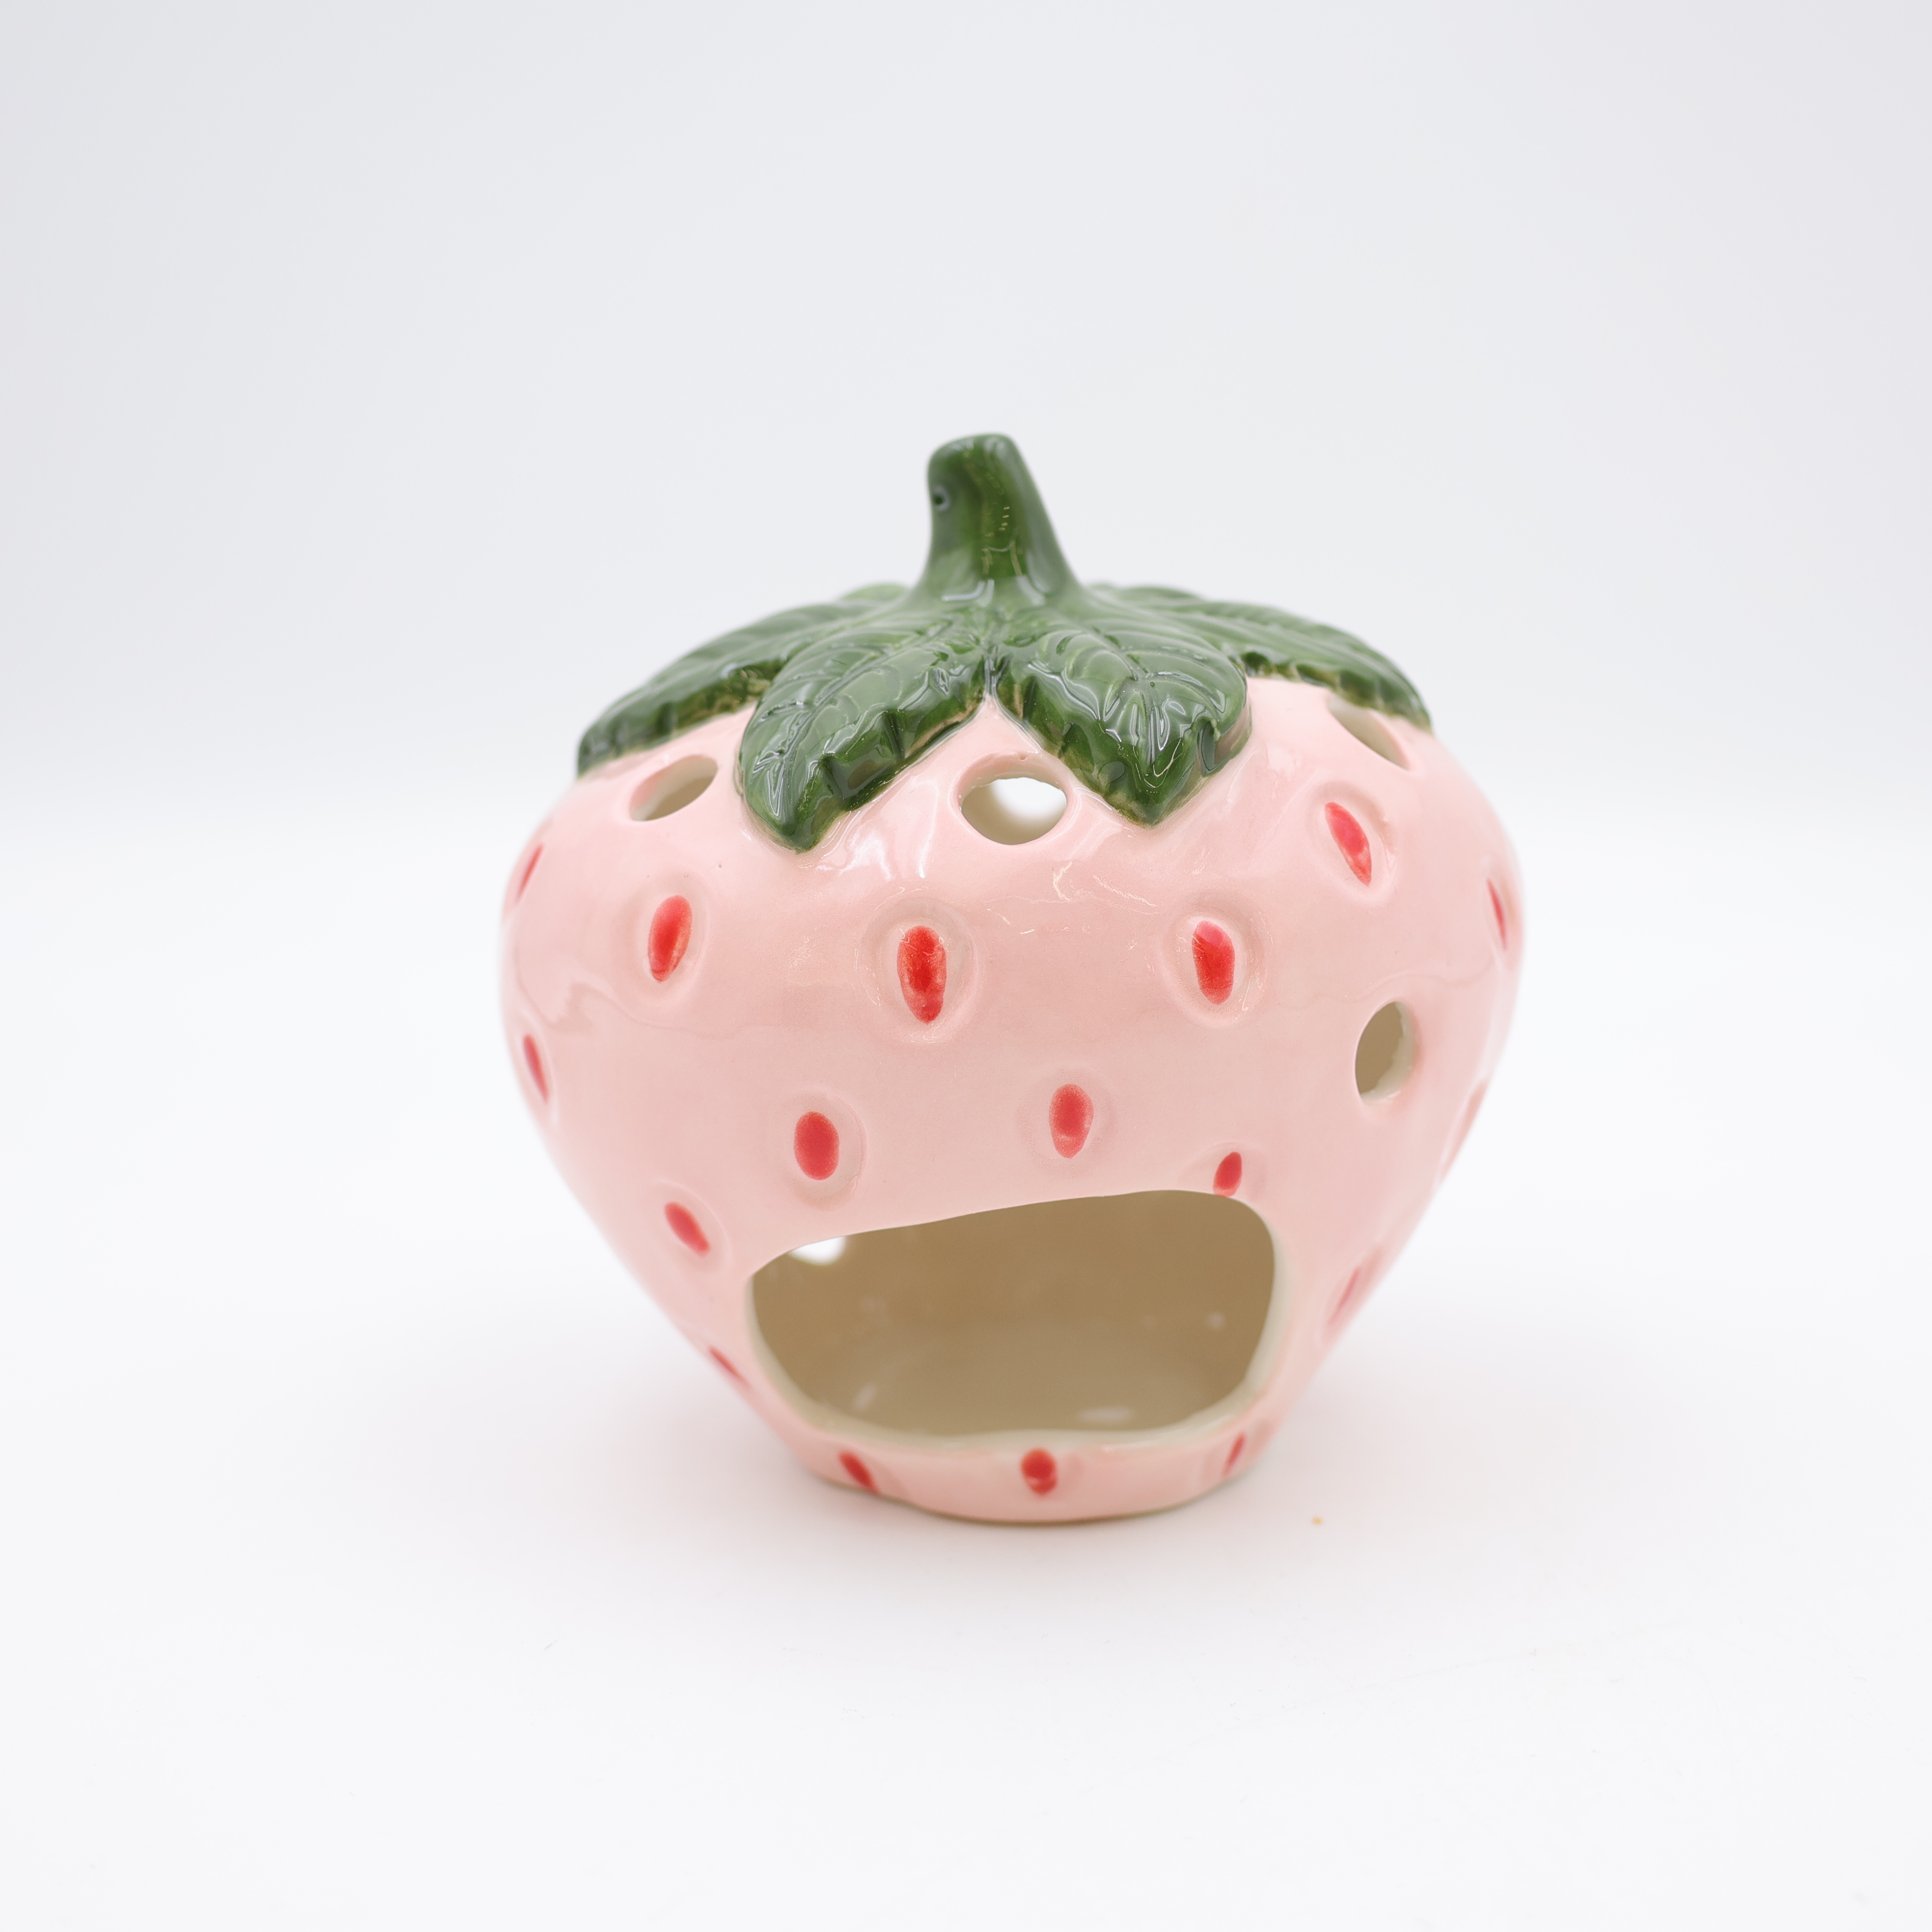 Ceramic strawberry mariƙin